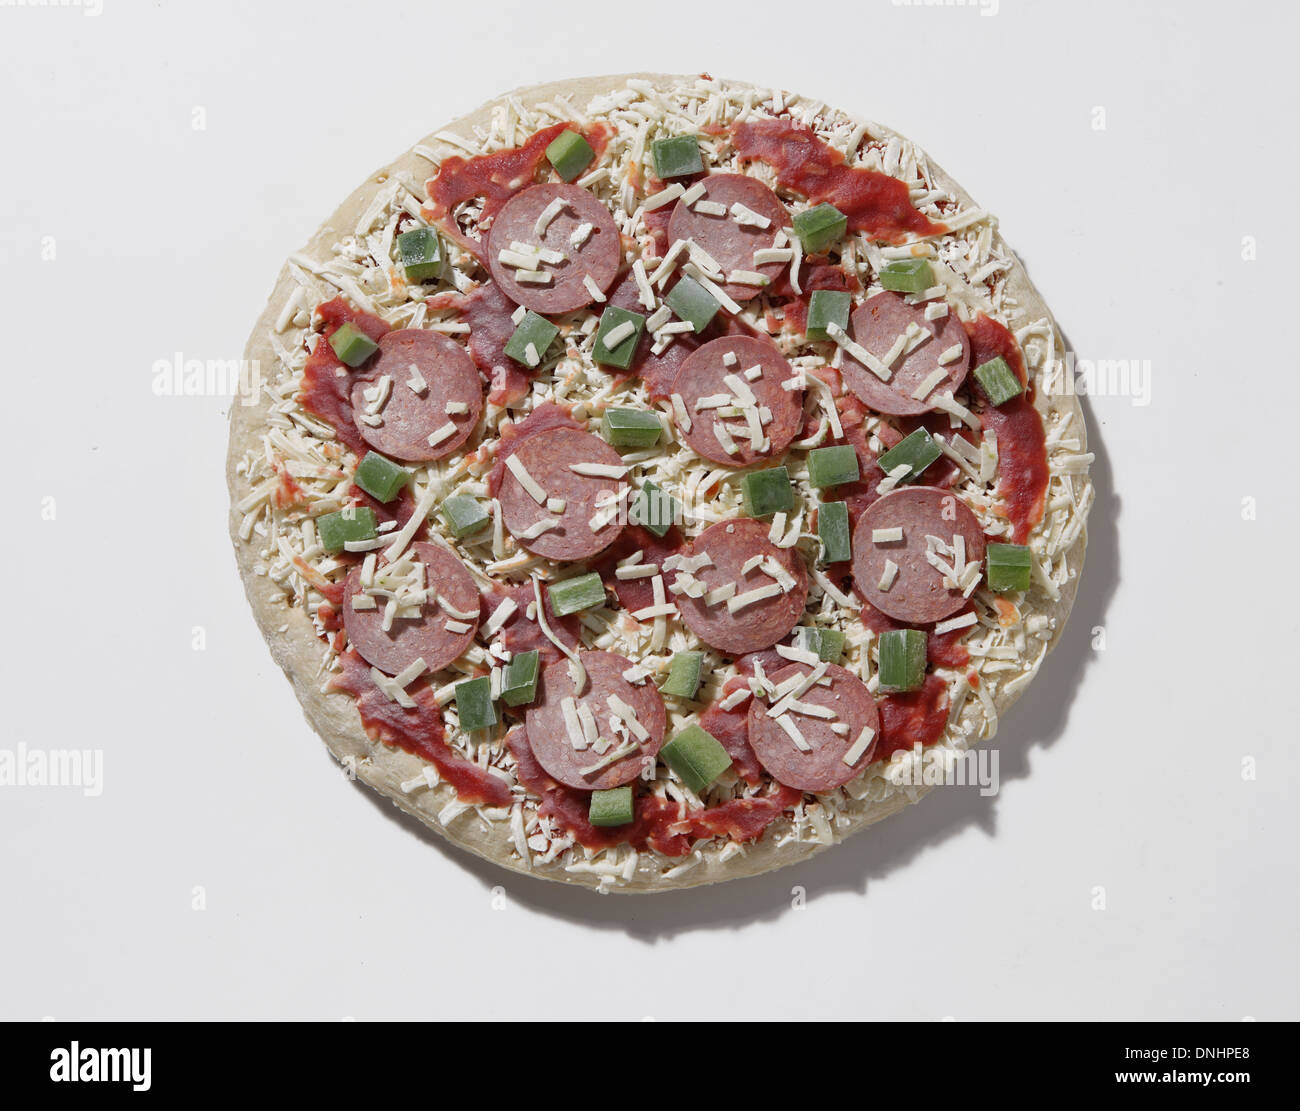 Una ronda sin cocer la pizza congelada. Foto de stock